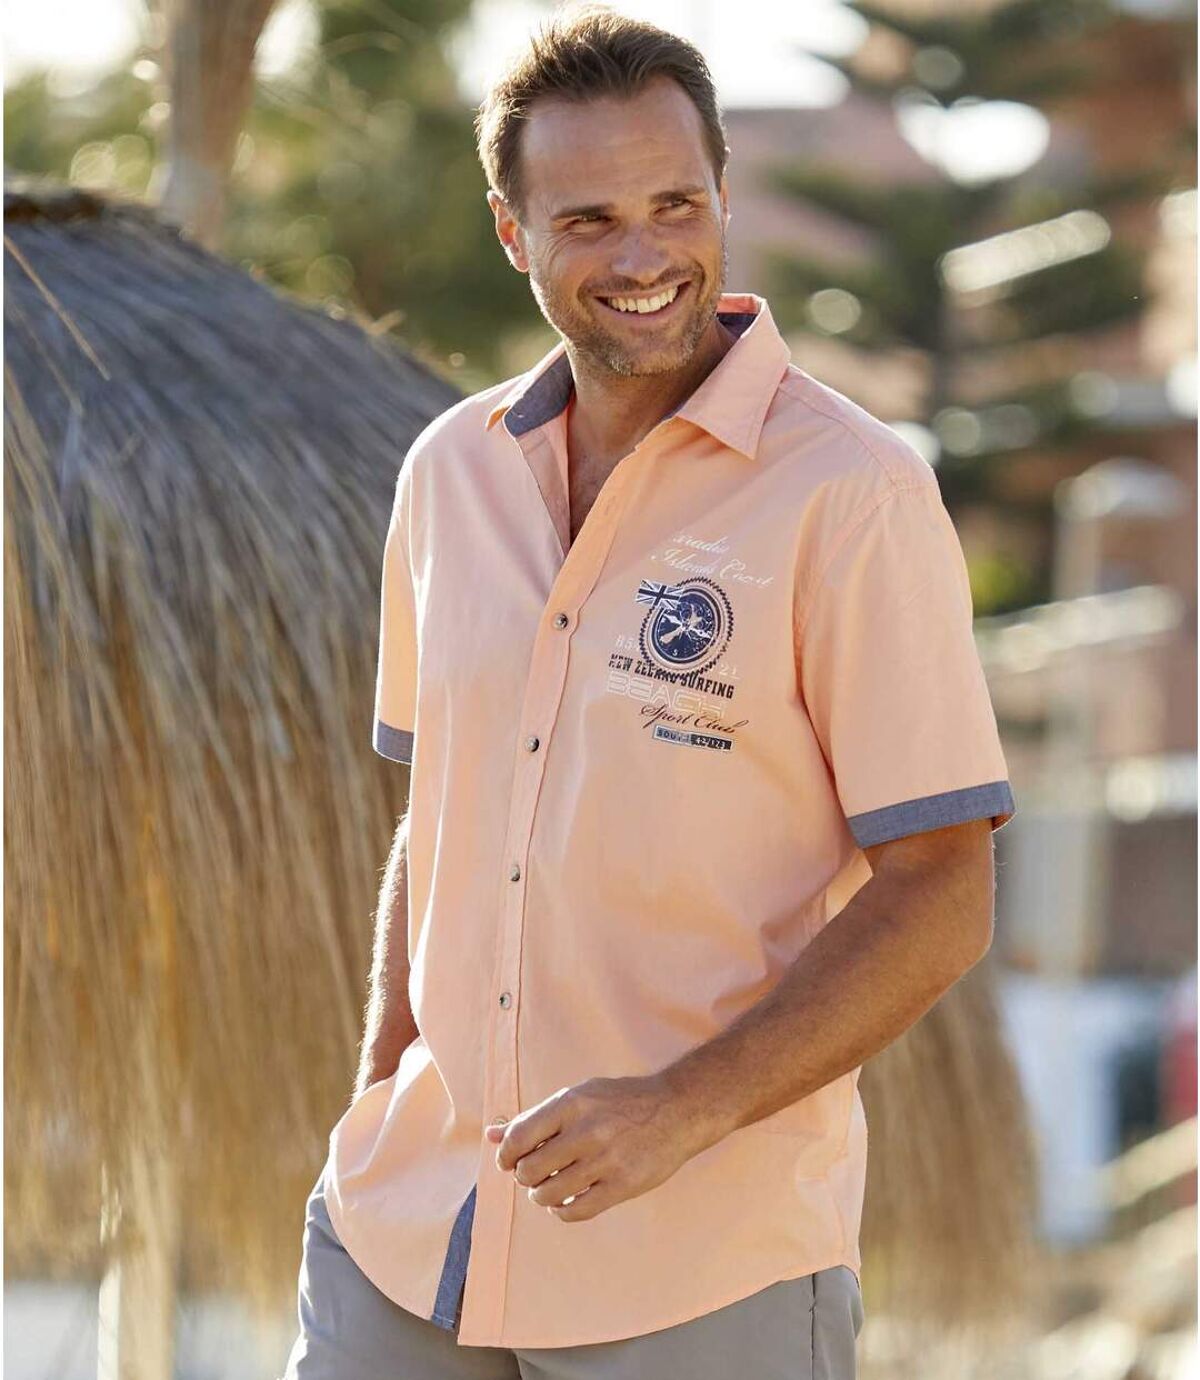 Men's Stylish Coral Summer Shirt - Short Sleeves Atlas For Men